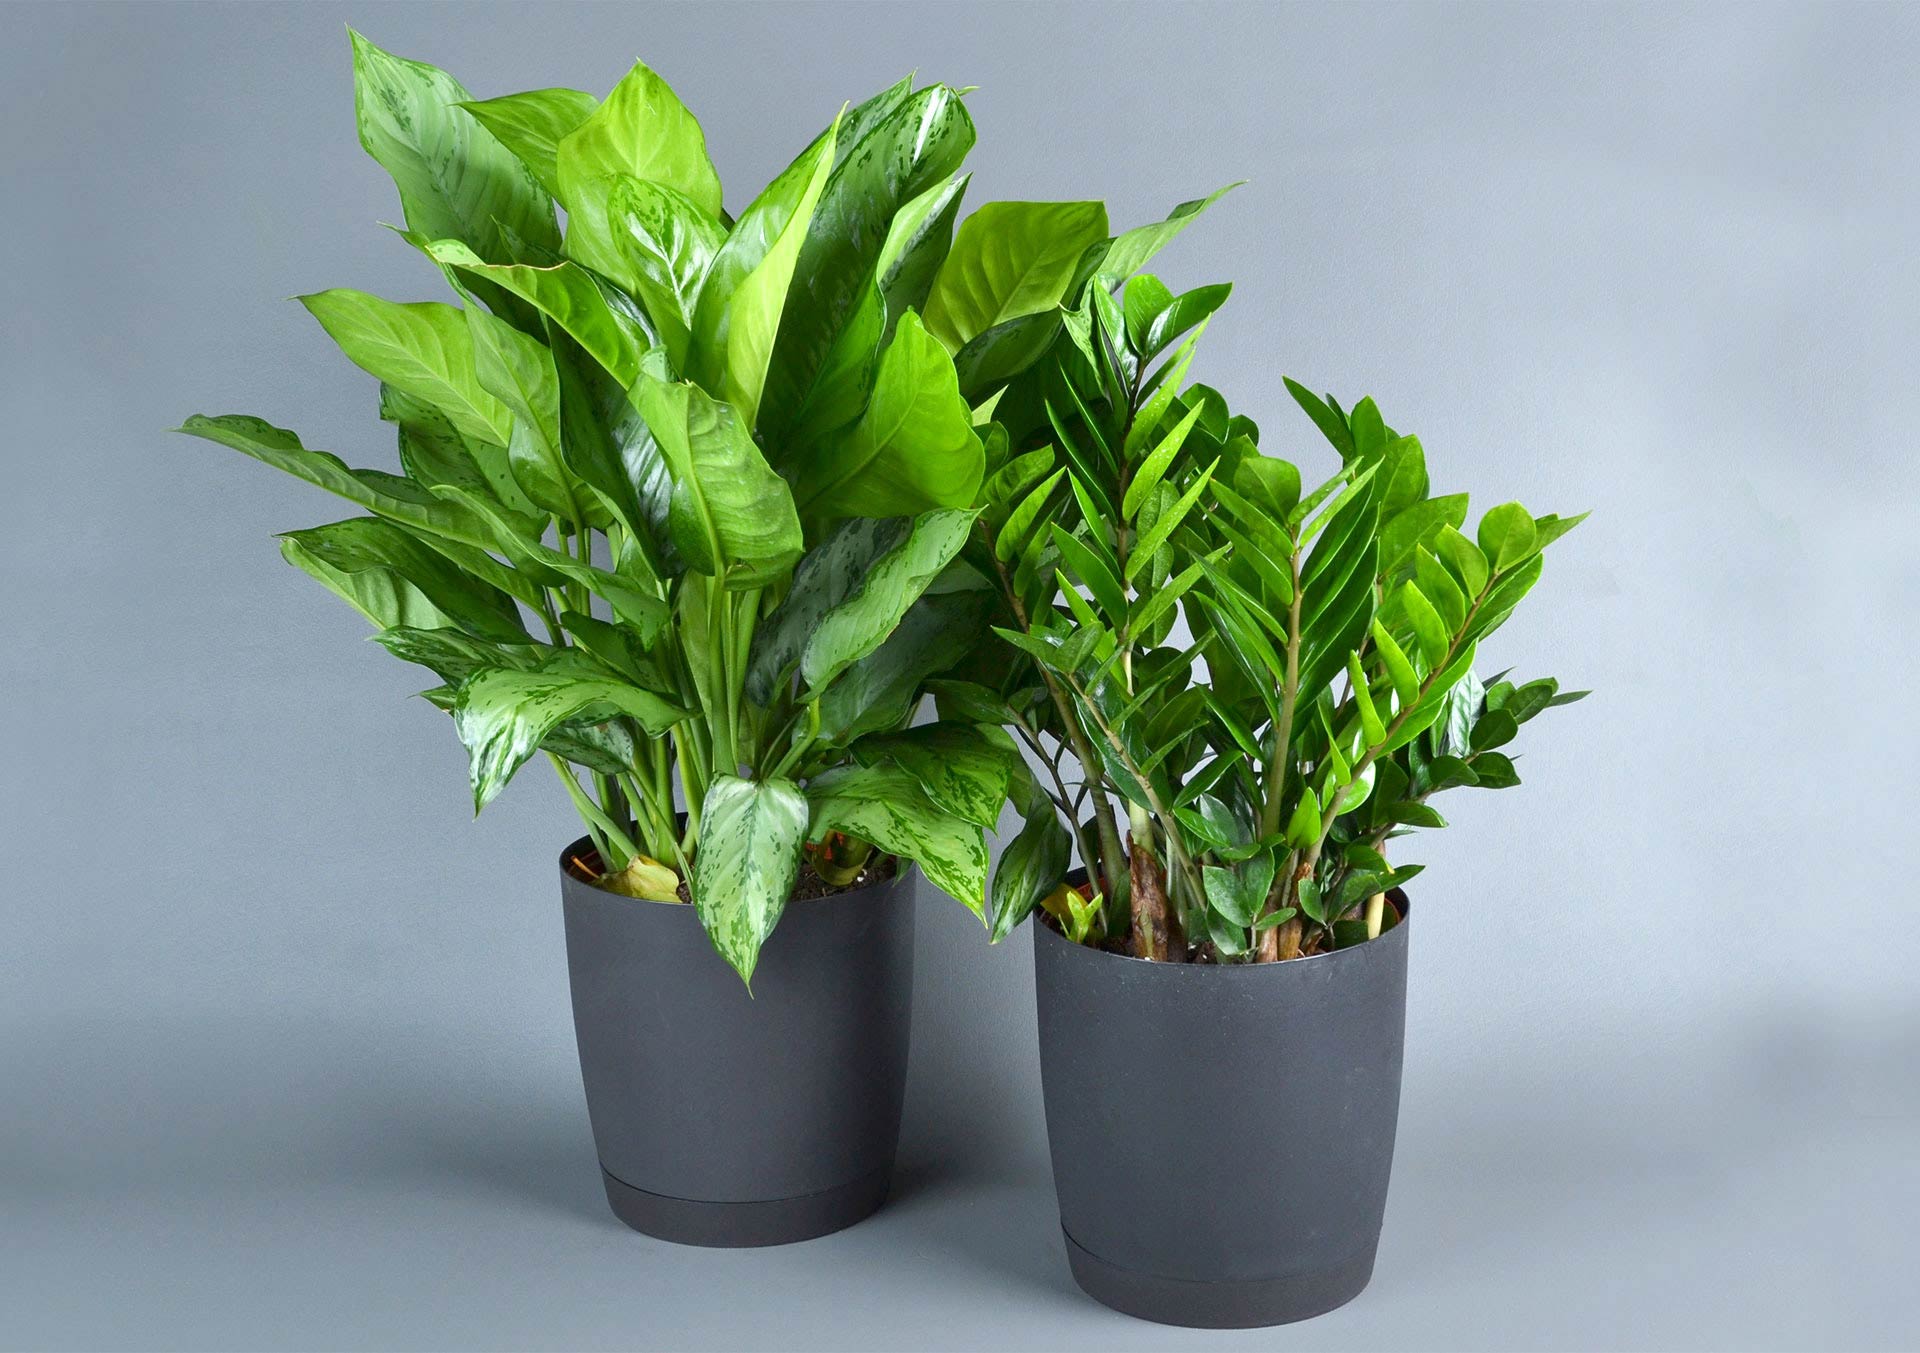 Shop Green Plants | Bachmans.com | BACHMAN'S